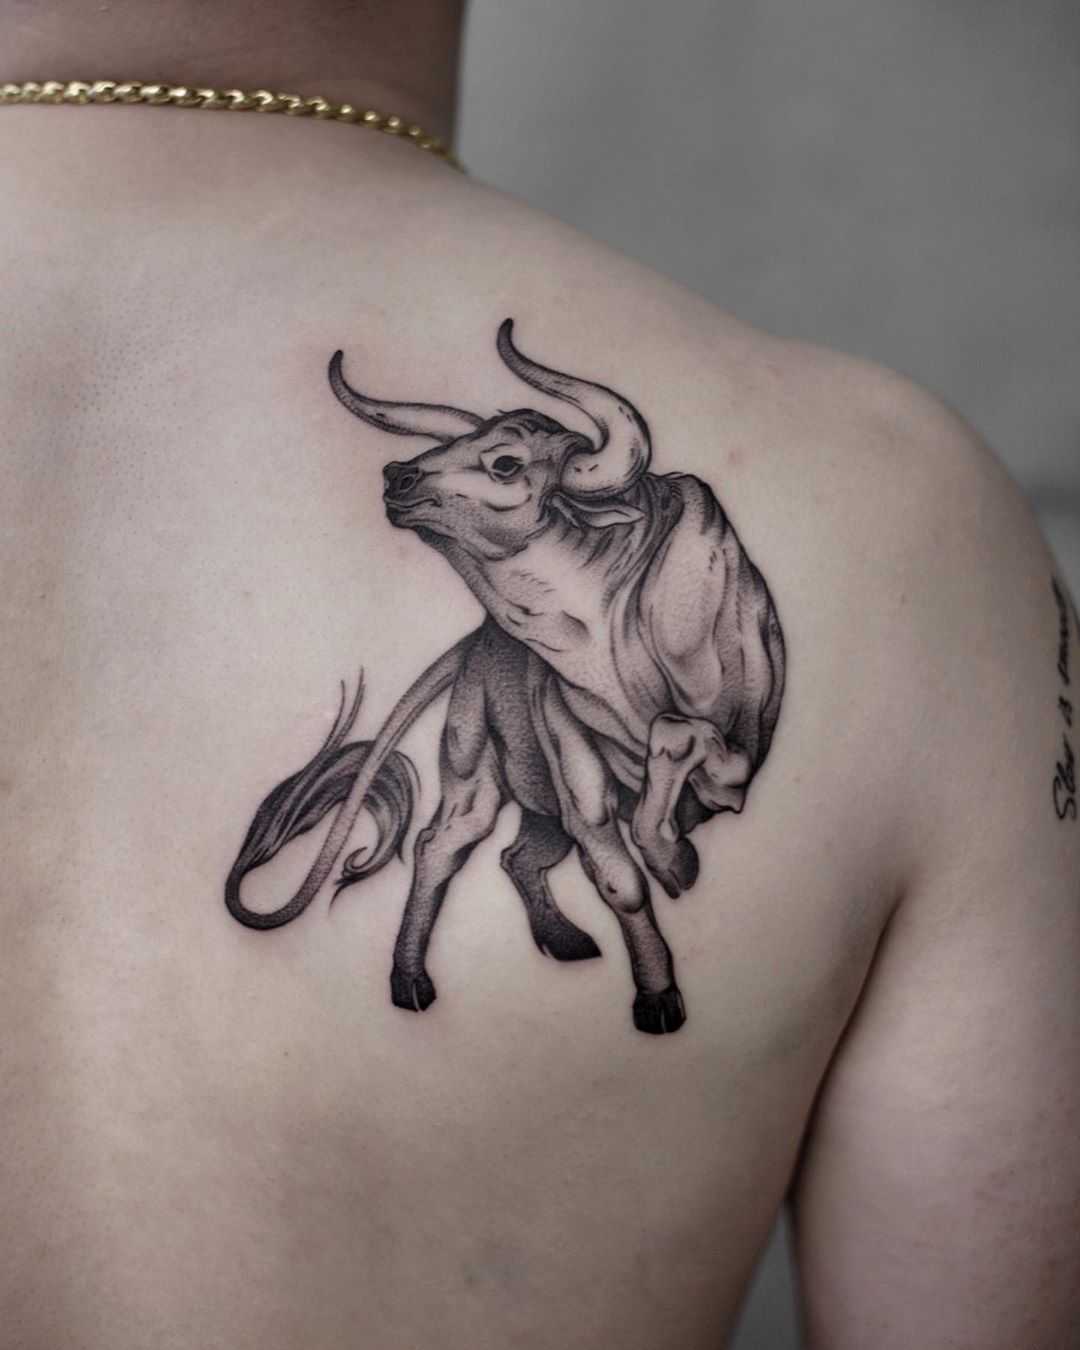 Bull tattoo by Aki Wong